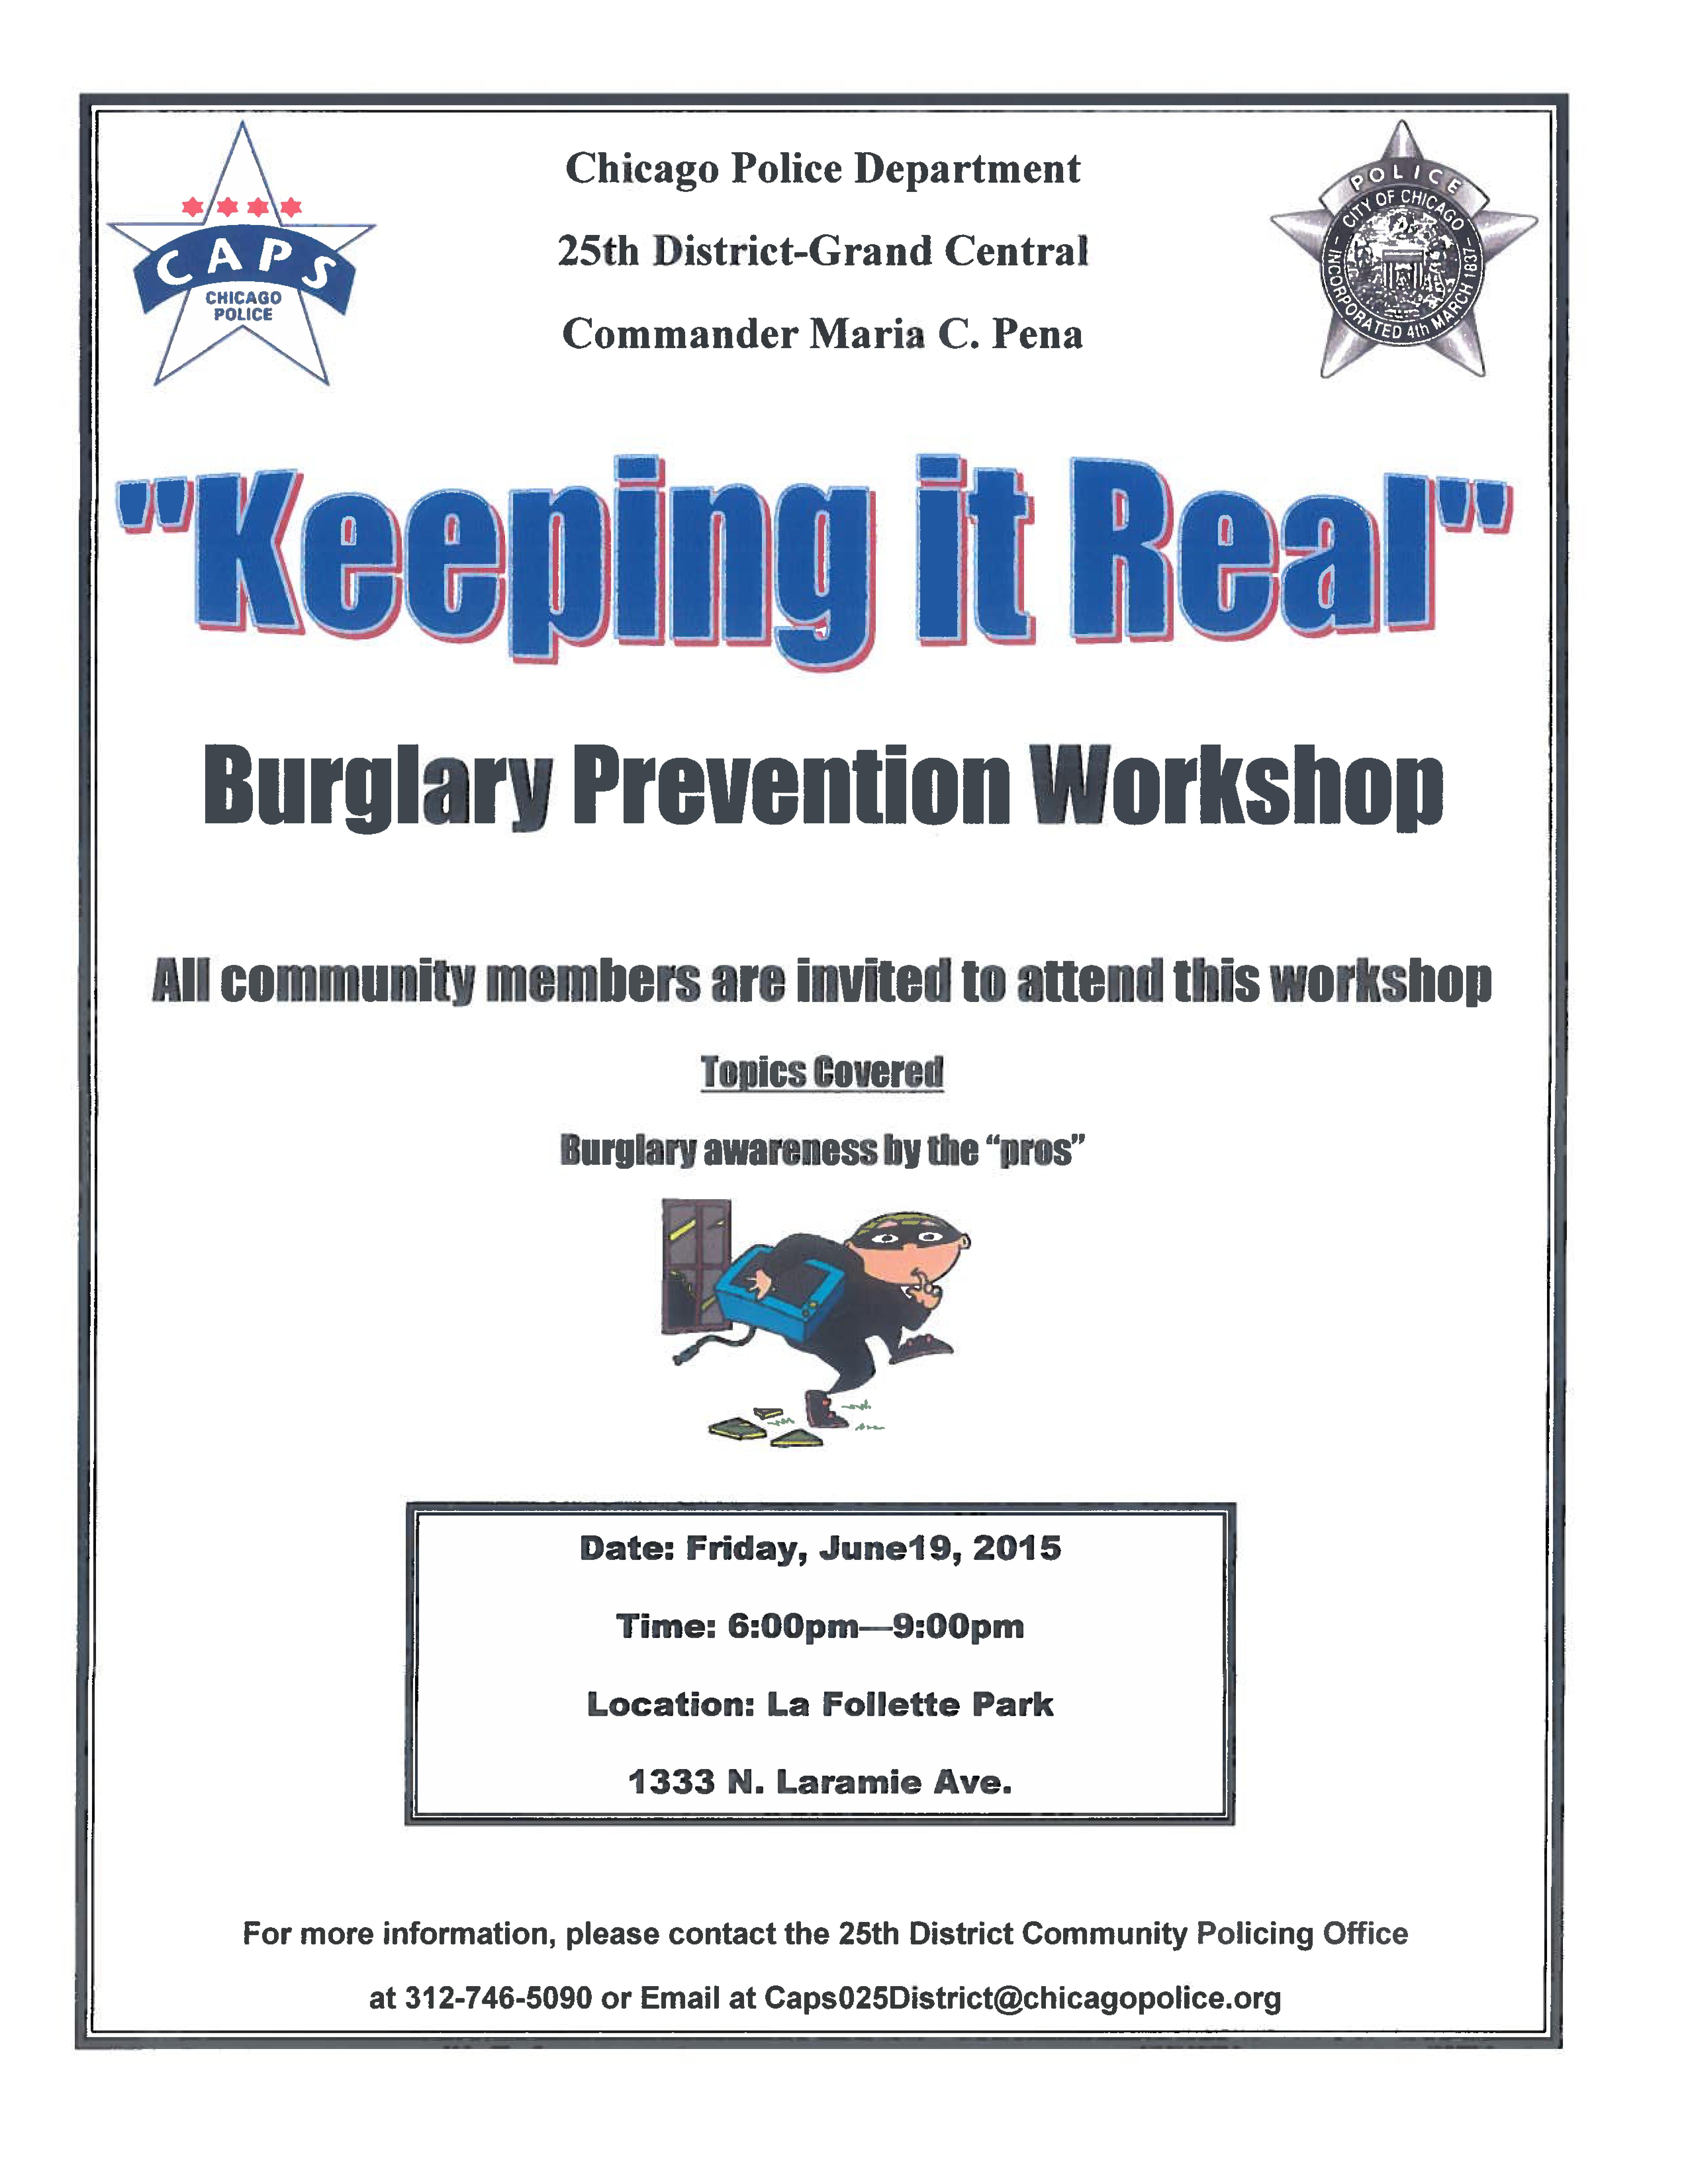 Burglary Prevention Workshop Chicago Police Department